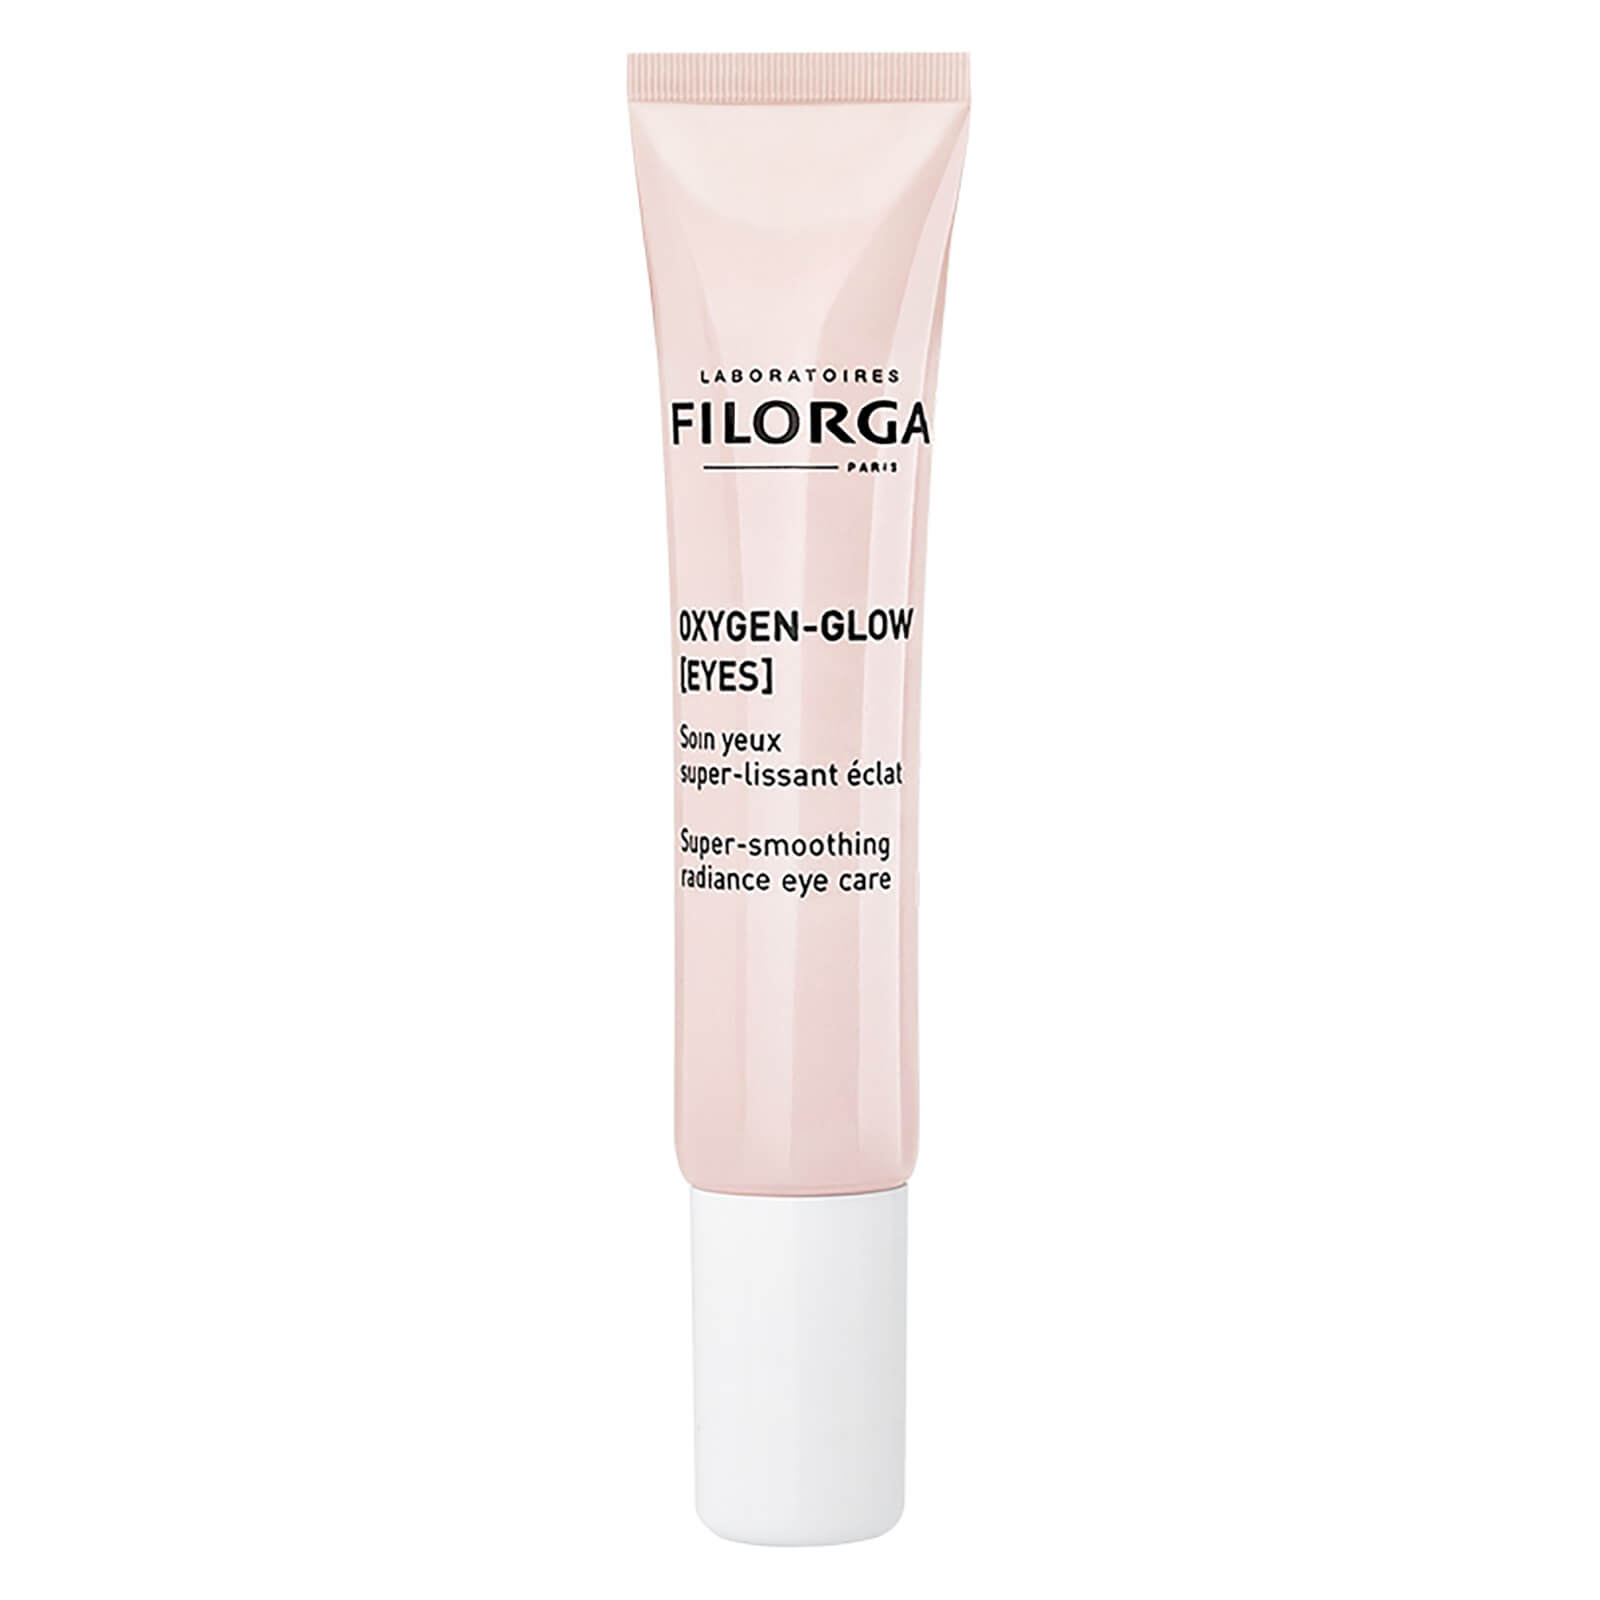 Filorga Oxygen-Glow Eyes Cream 0.5 fl. oz